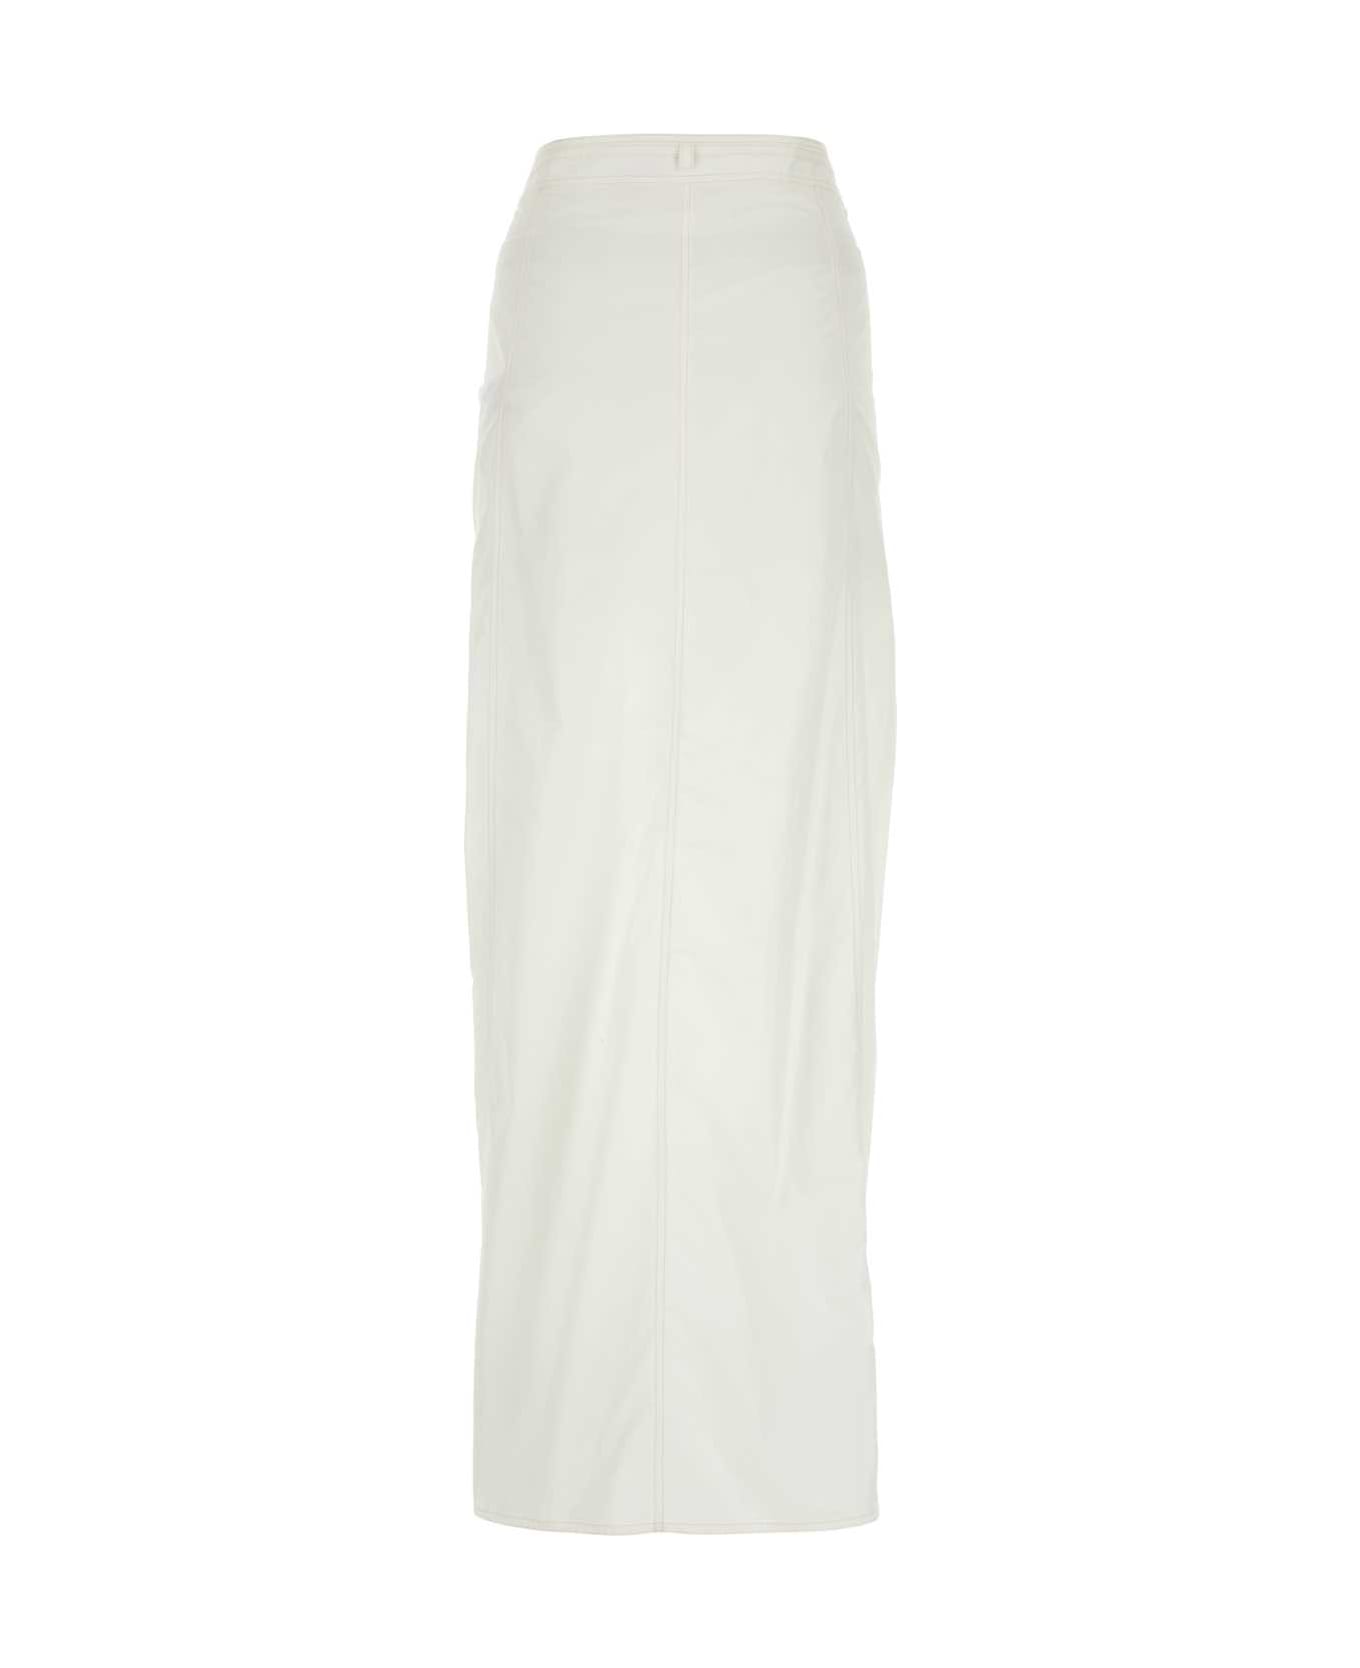 Pucci White Nylon Blend Skirt - BIANCO スカート